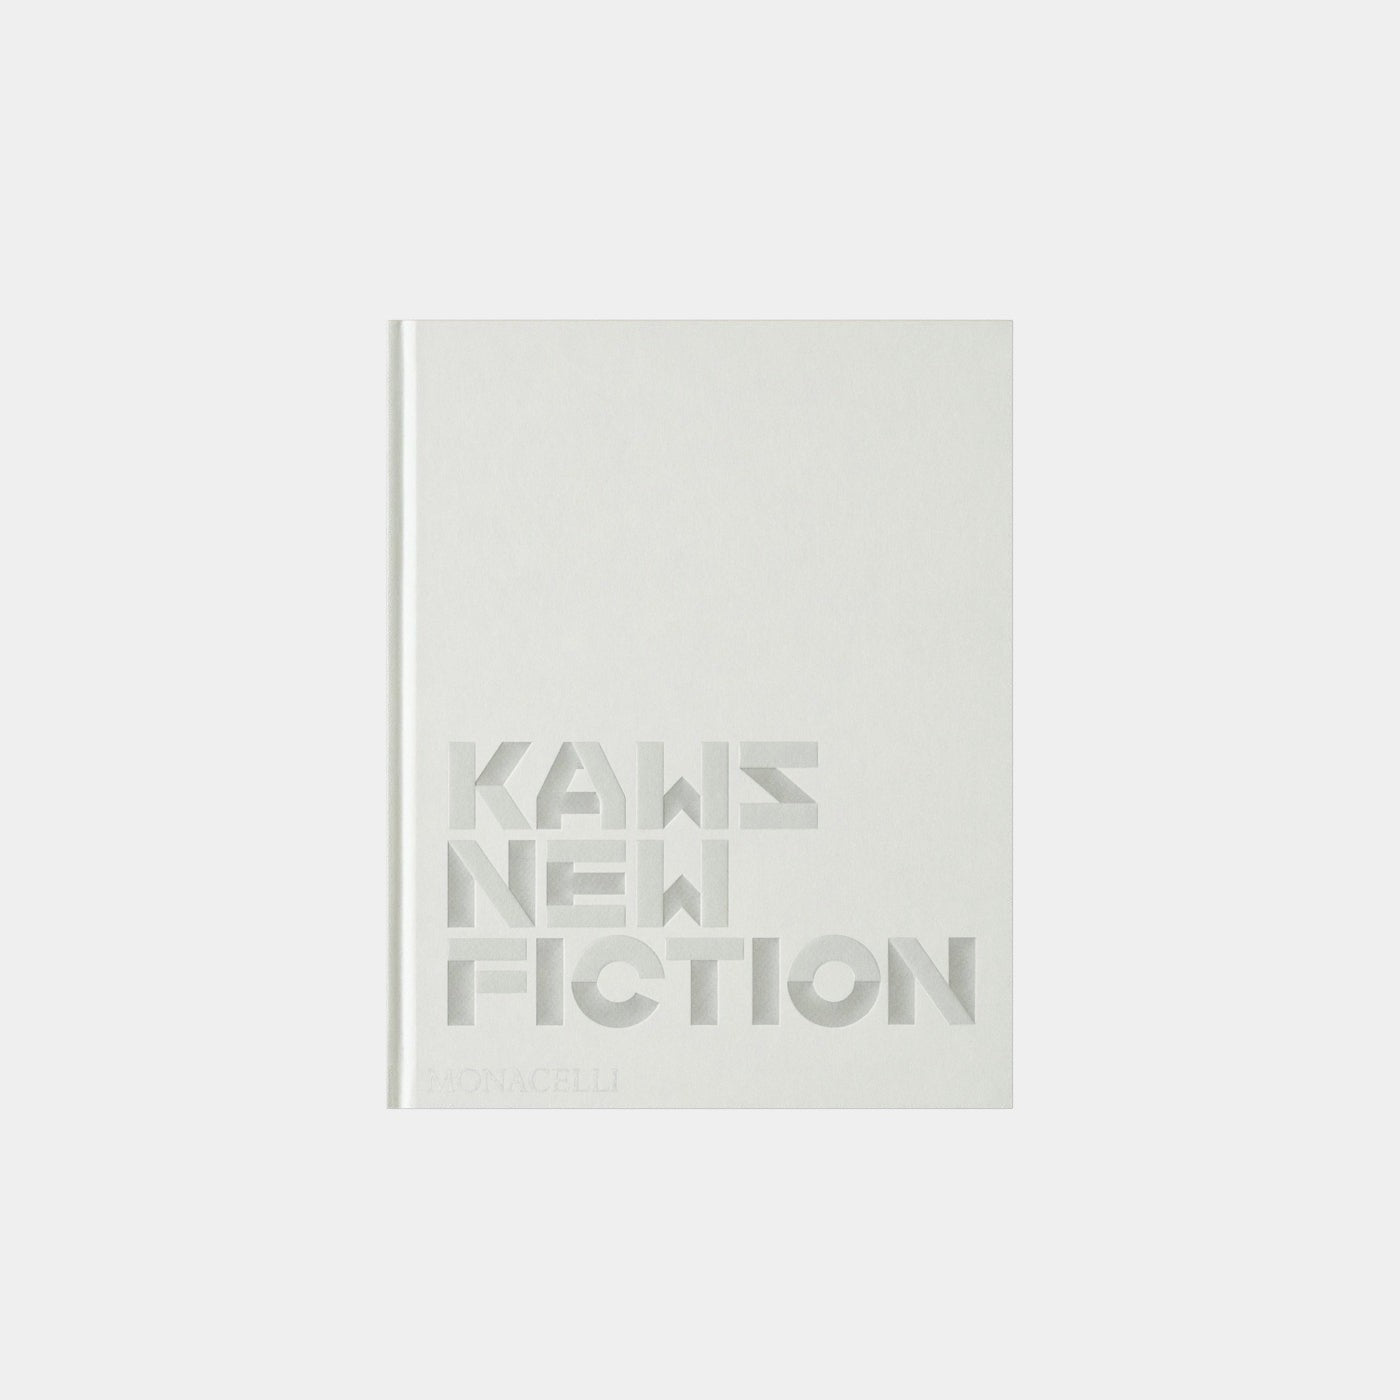 KAWS, New Fiction